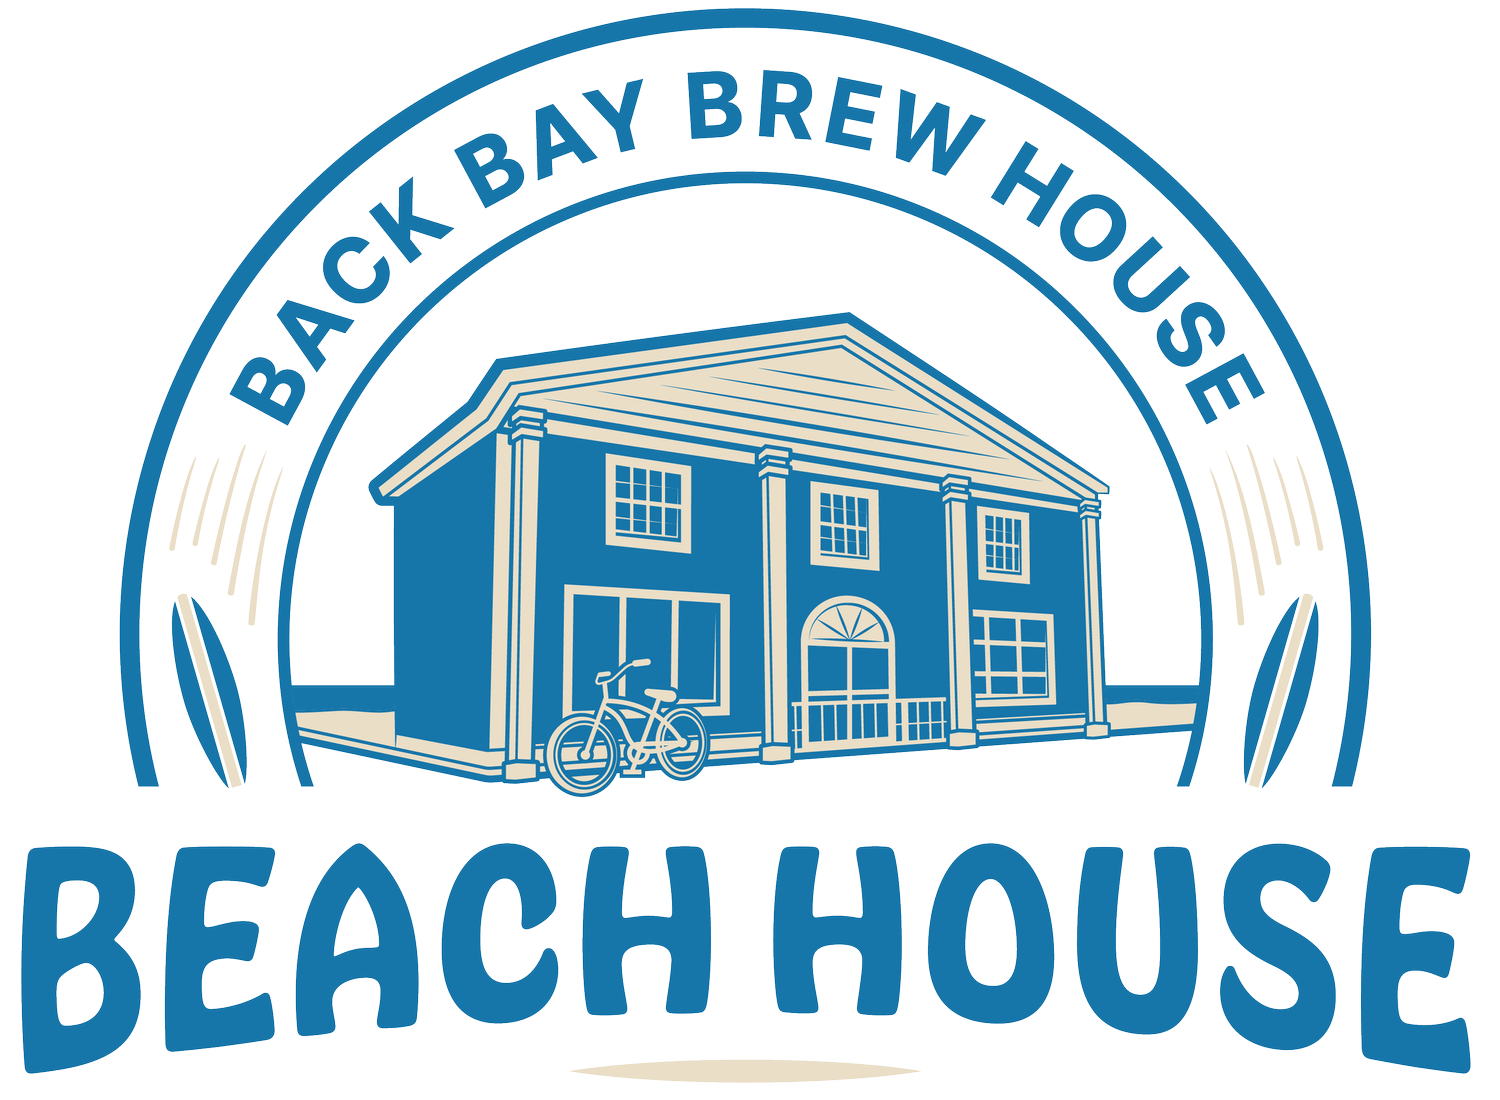 Back Bay Brew House Beach House